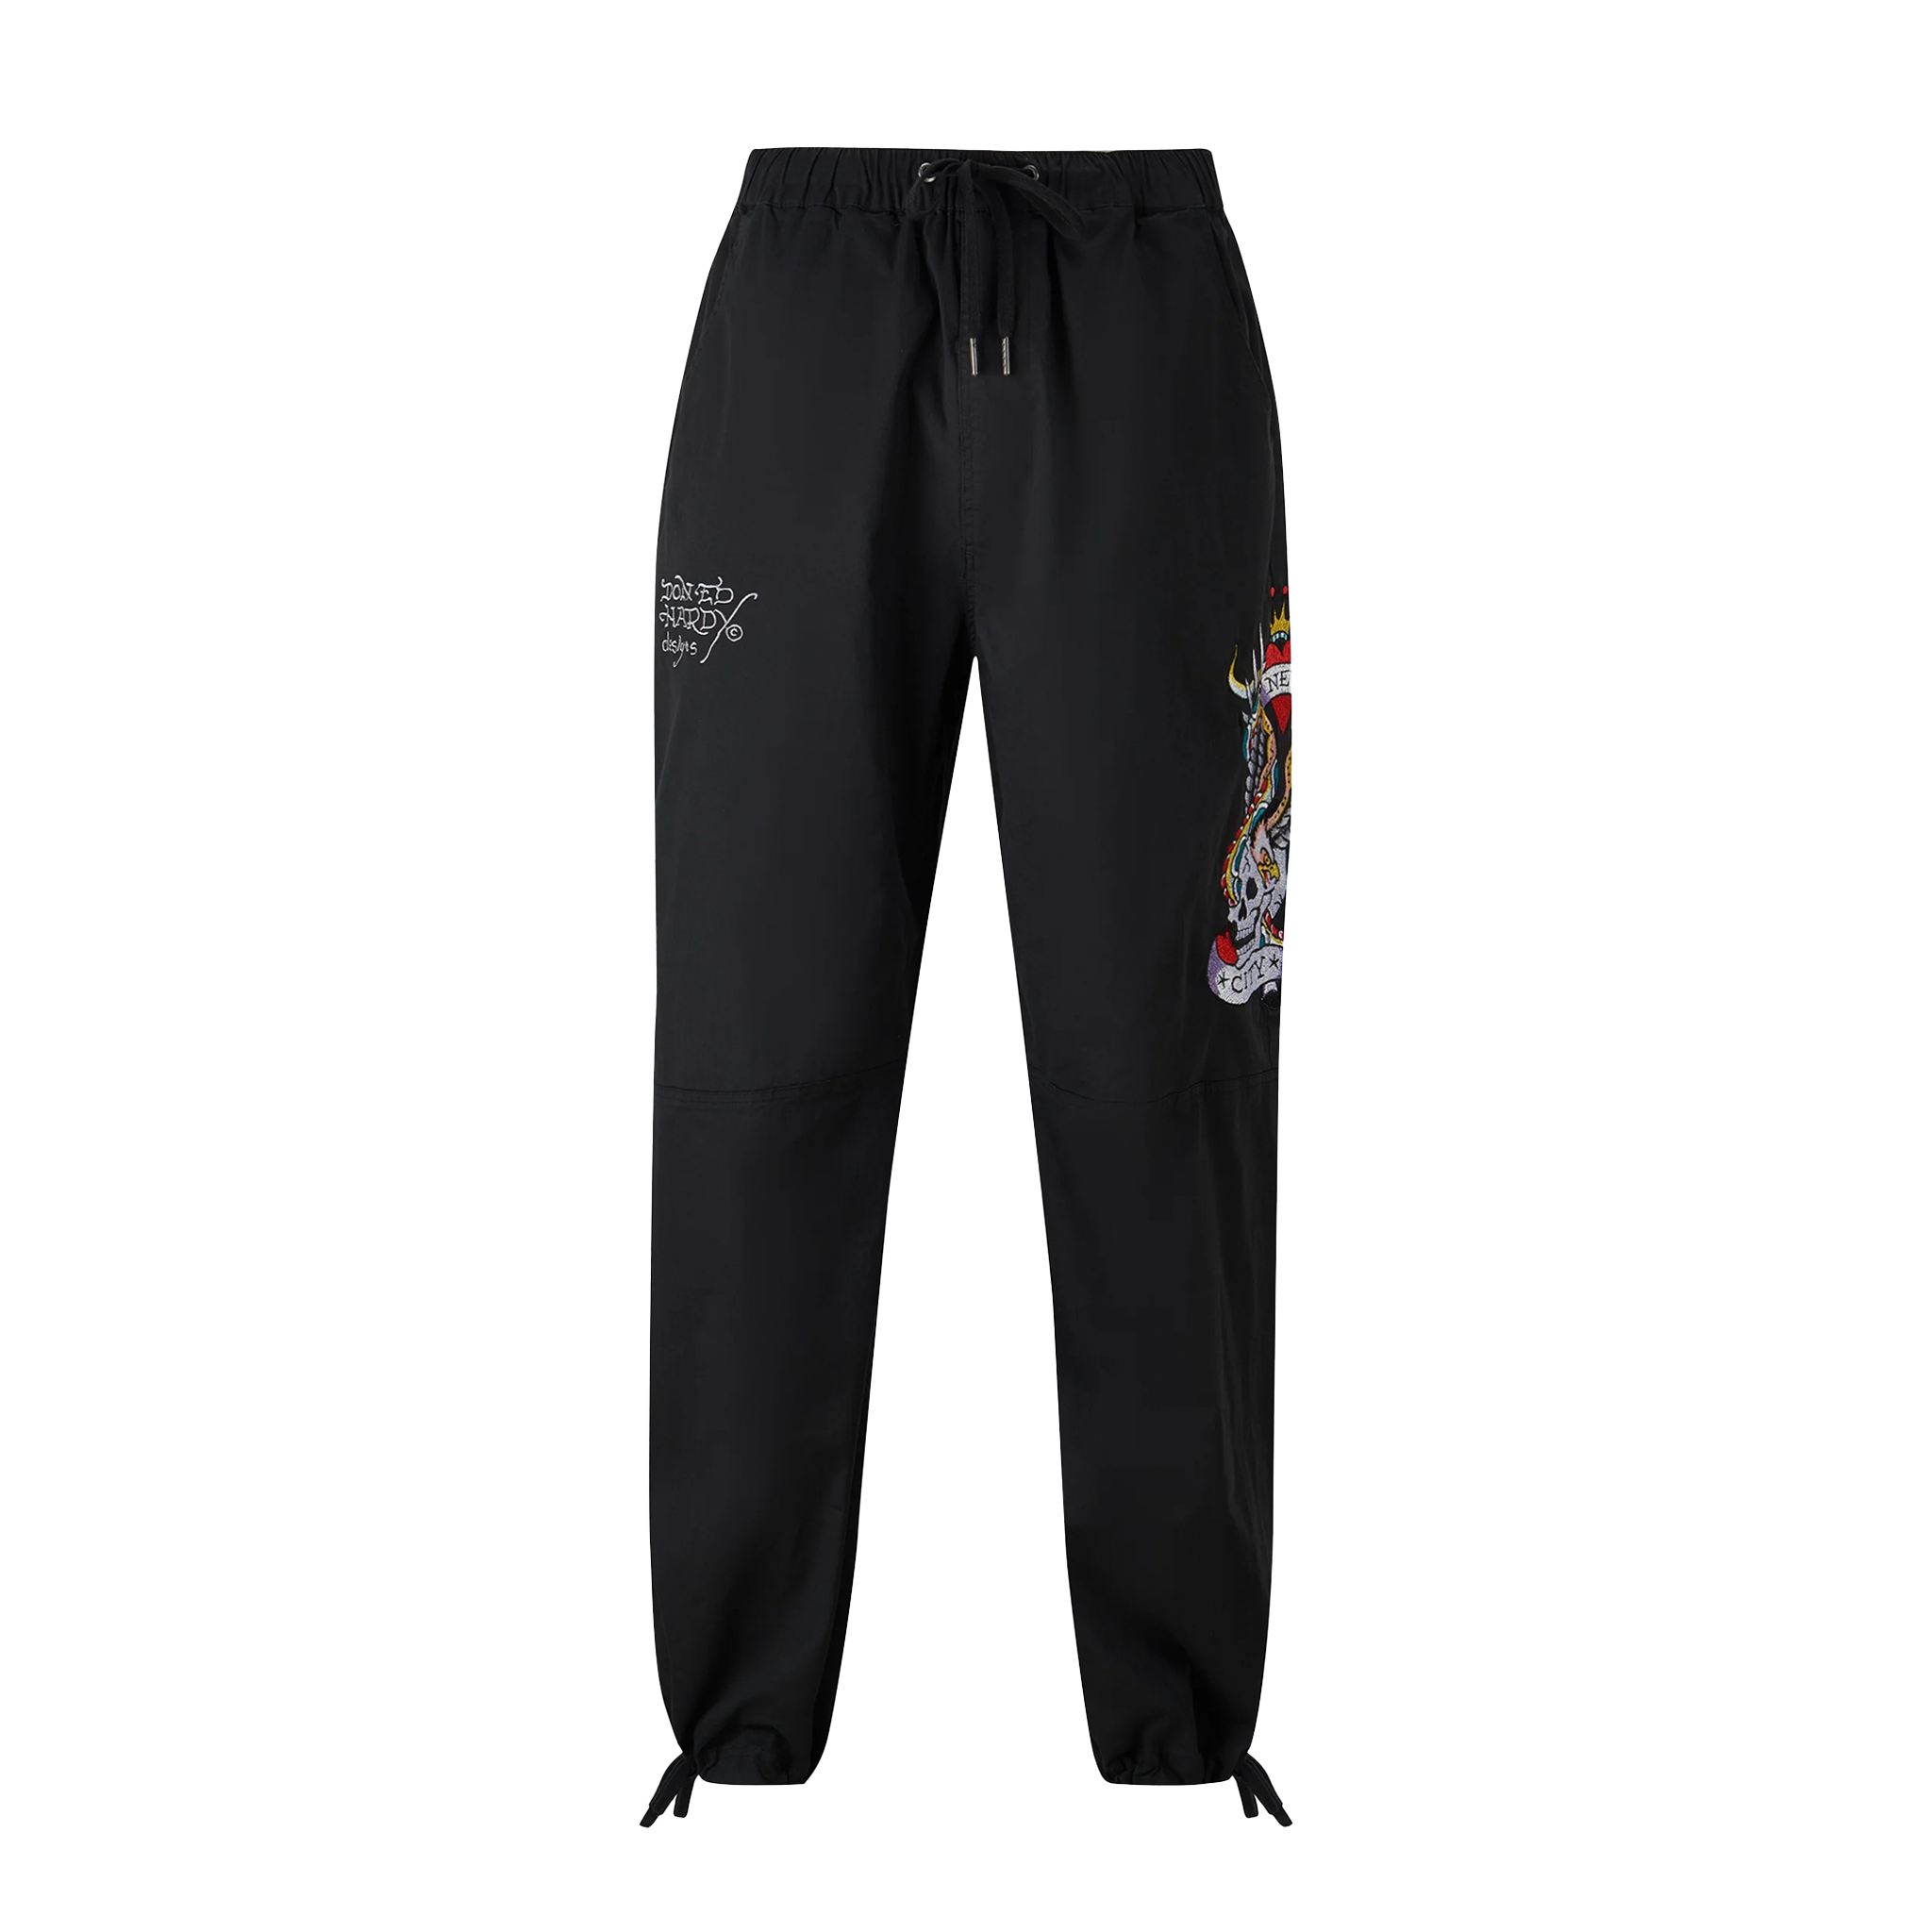 Urban Outfitters Ed Hardy Cargo Pants Trousers Medium Black Pockets y2k 90s  | eBay